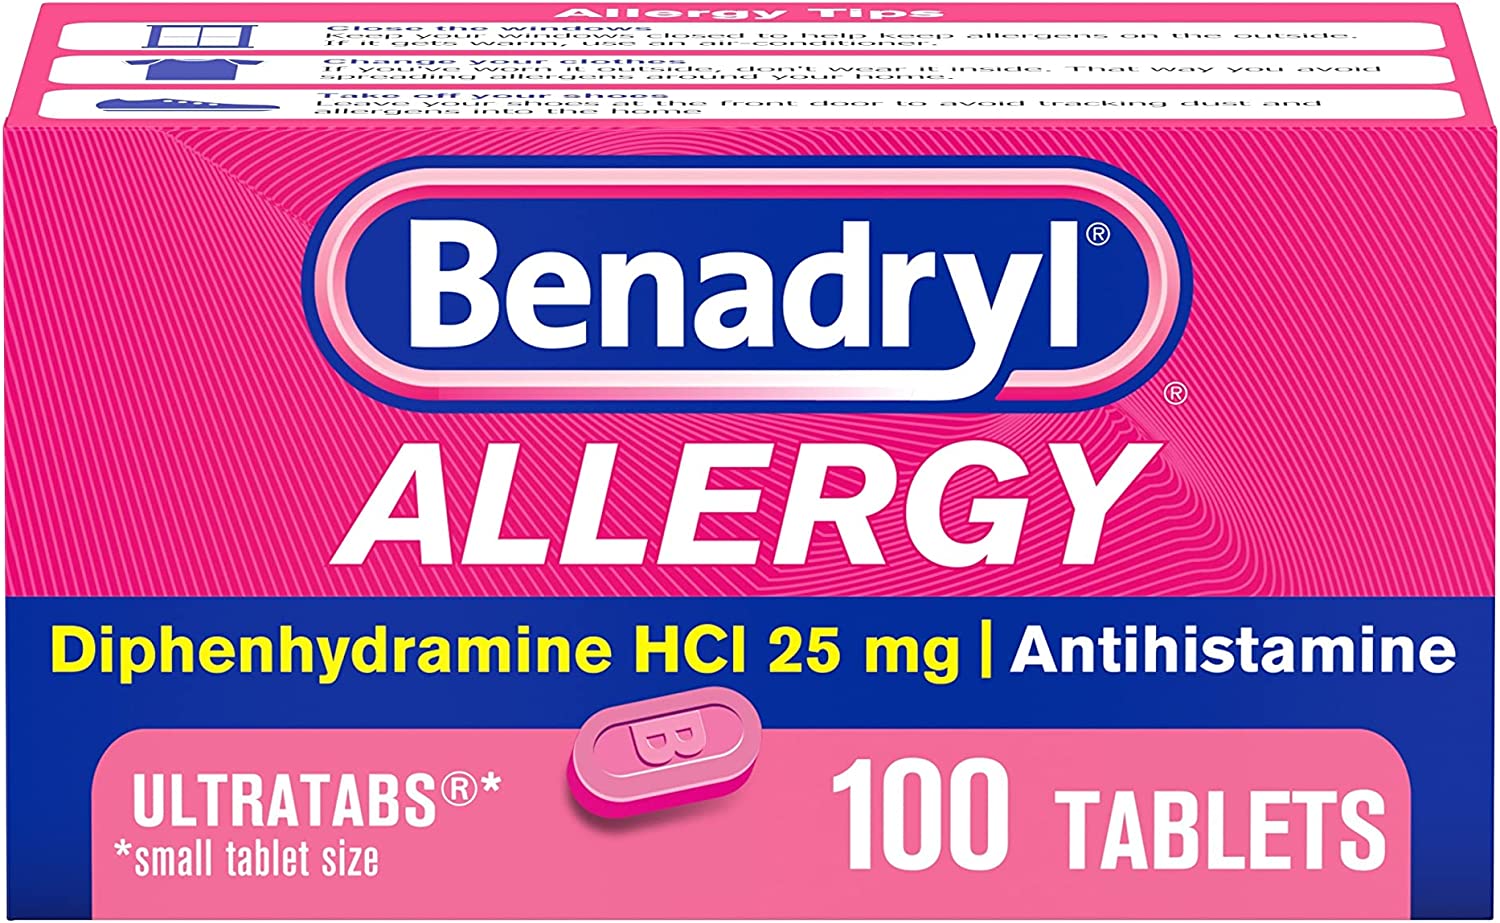 Benadryl Allergy Ultratabs Diphenhydramine HCl 25 mg Antihistamine Tablets, 100 Count - image 1 of 8